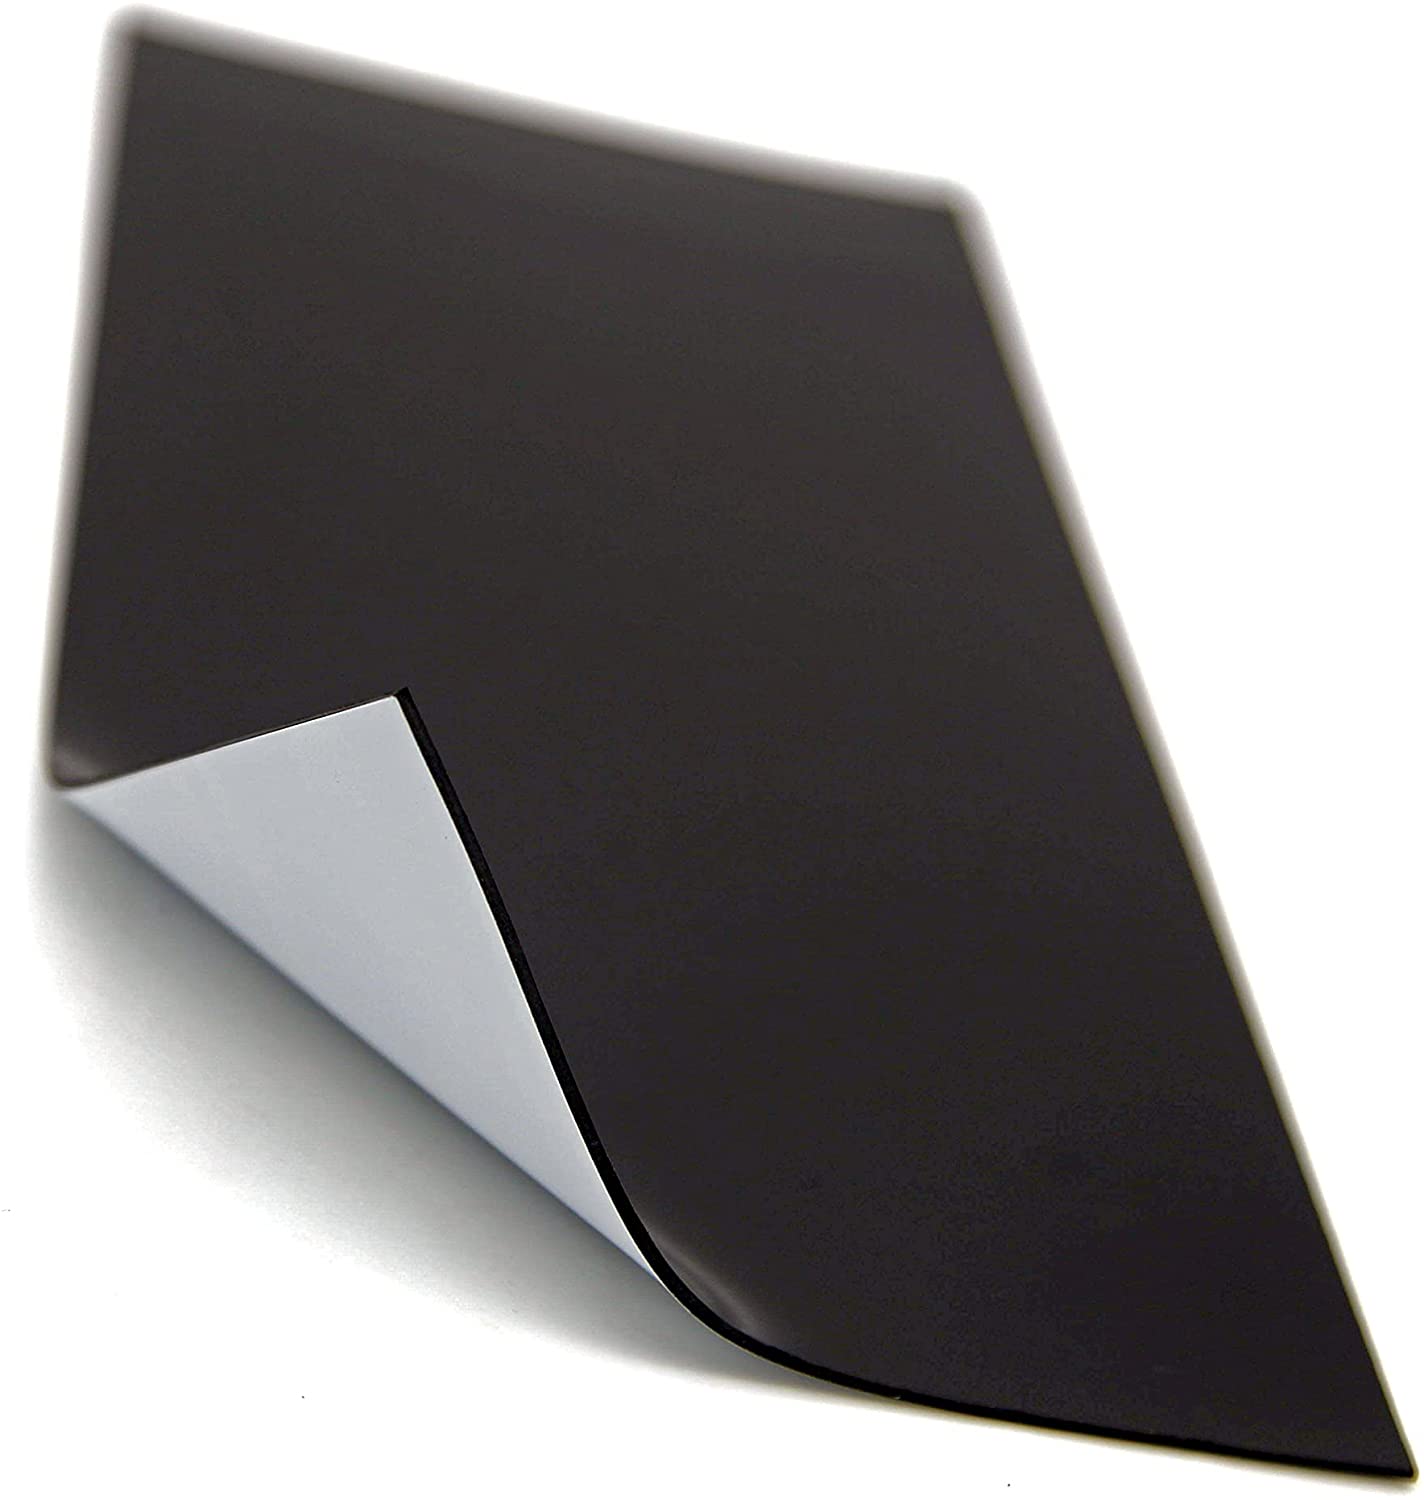 Magnetic Vent Covers 4 PCS - HVAC Premium Anisotropic 1.5mm Optimal Th